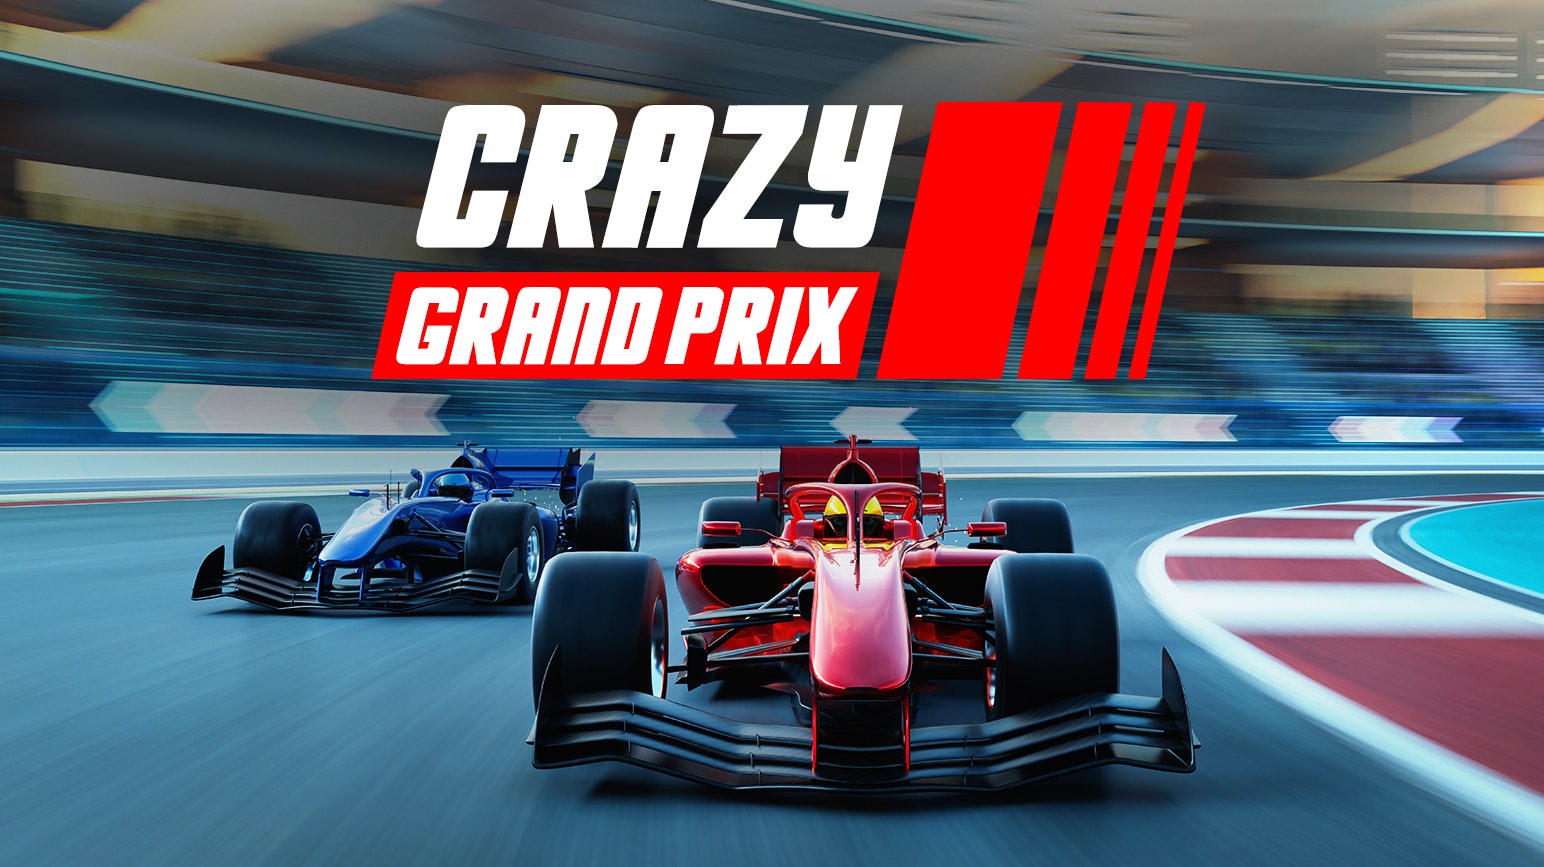 CRAZY GRAND PRIX free online game on